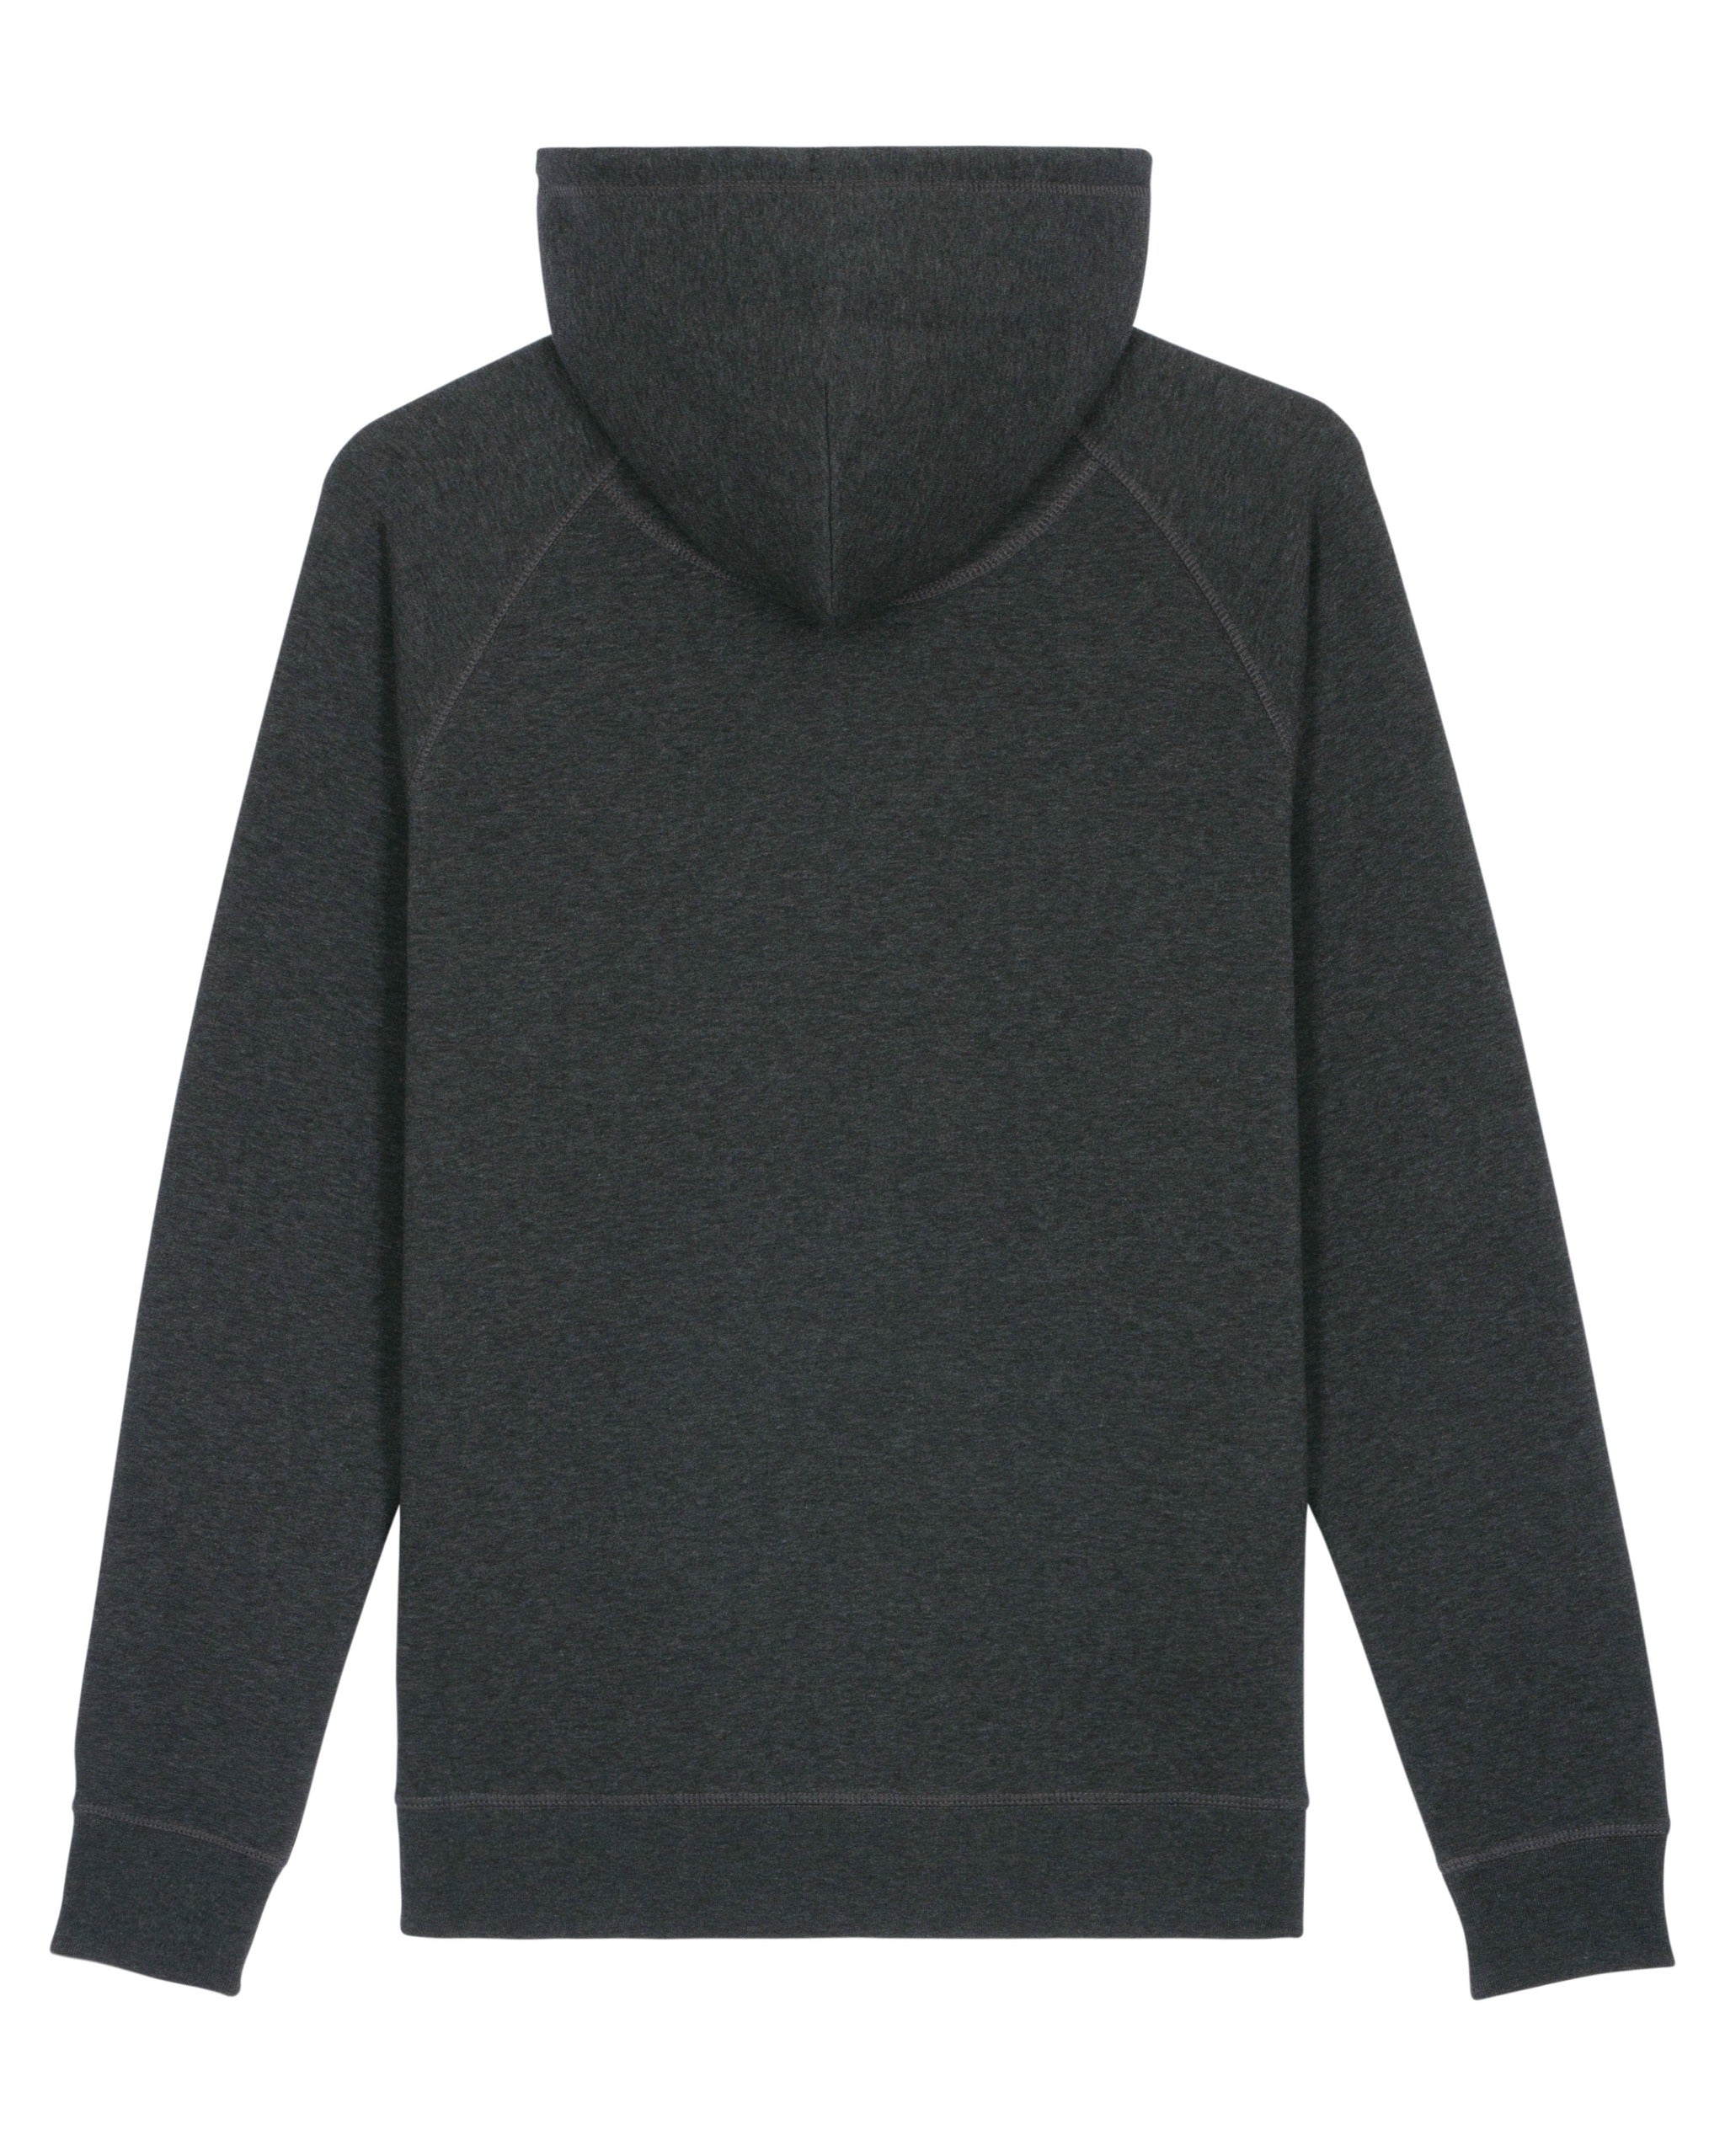 Unisex sweatshirt with side pockets "Reverie"